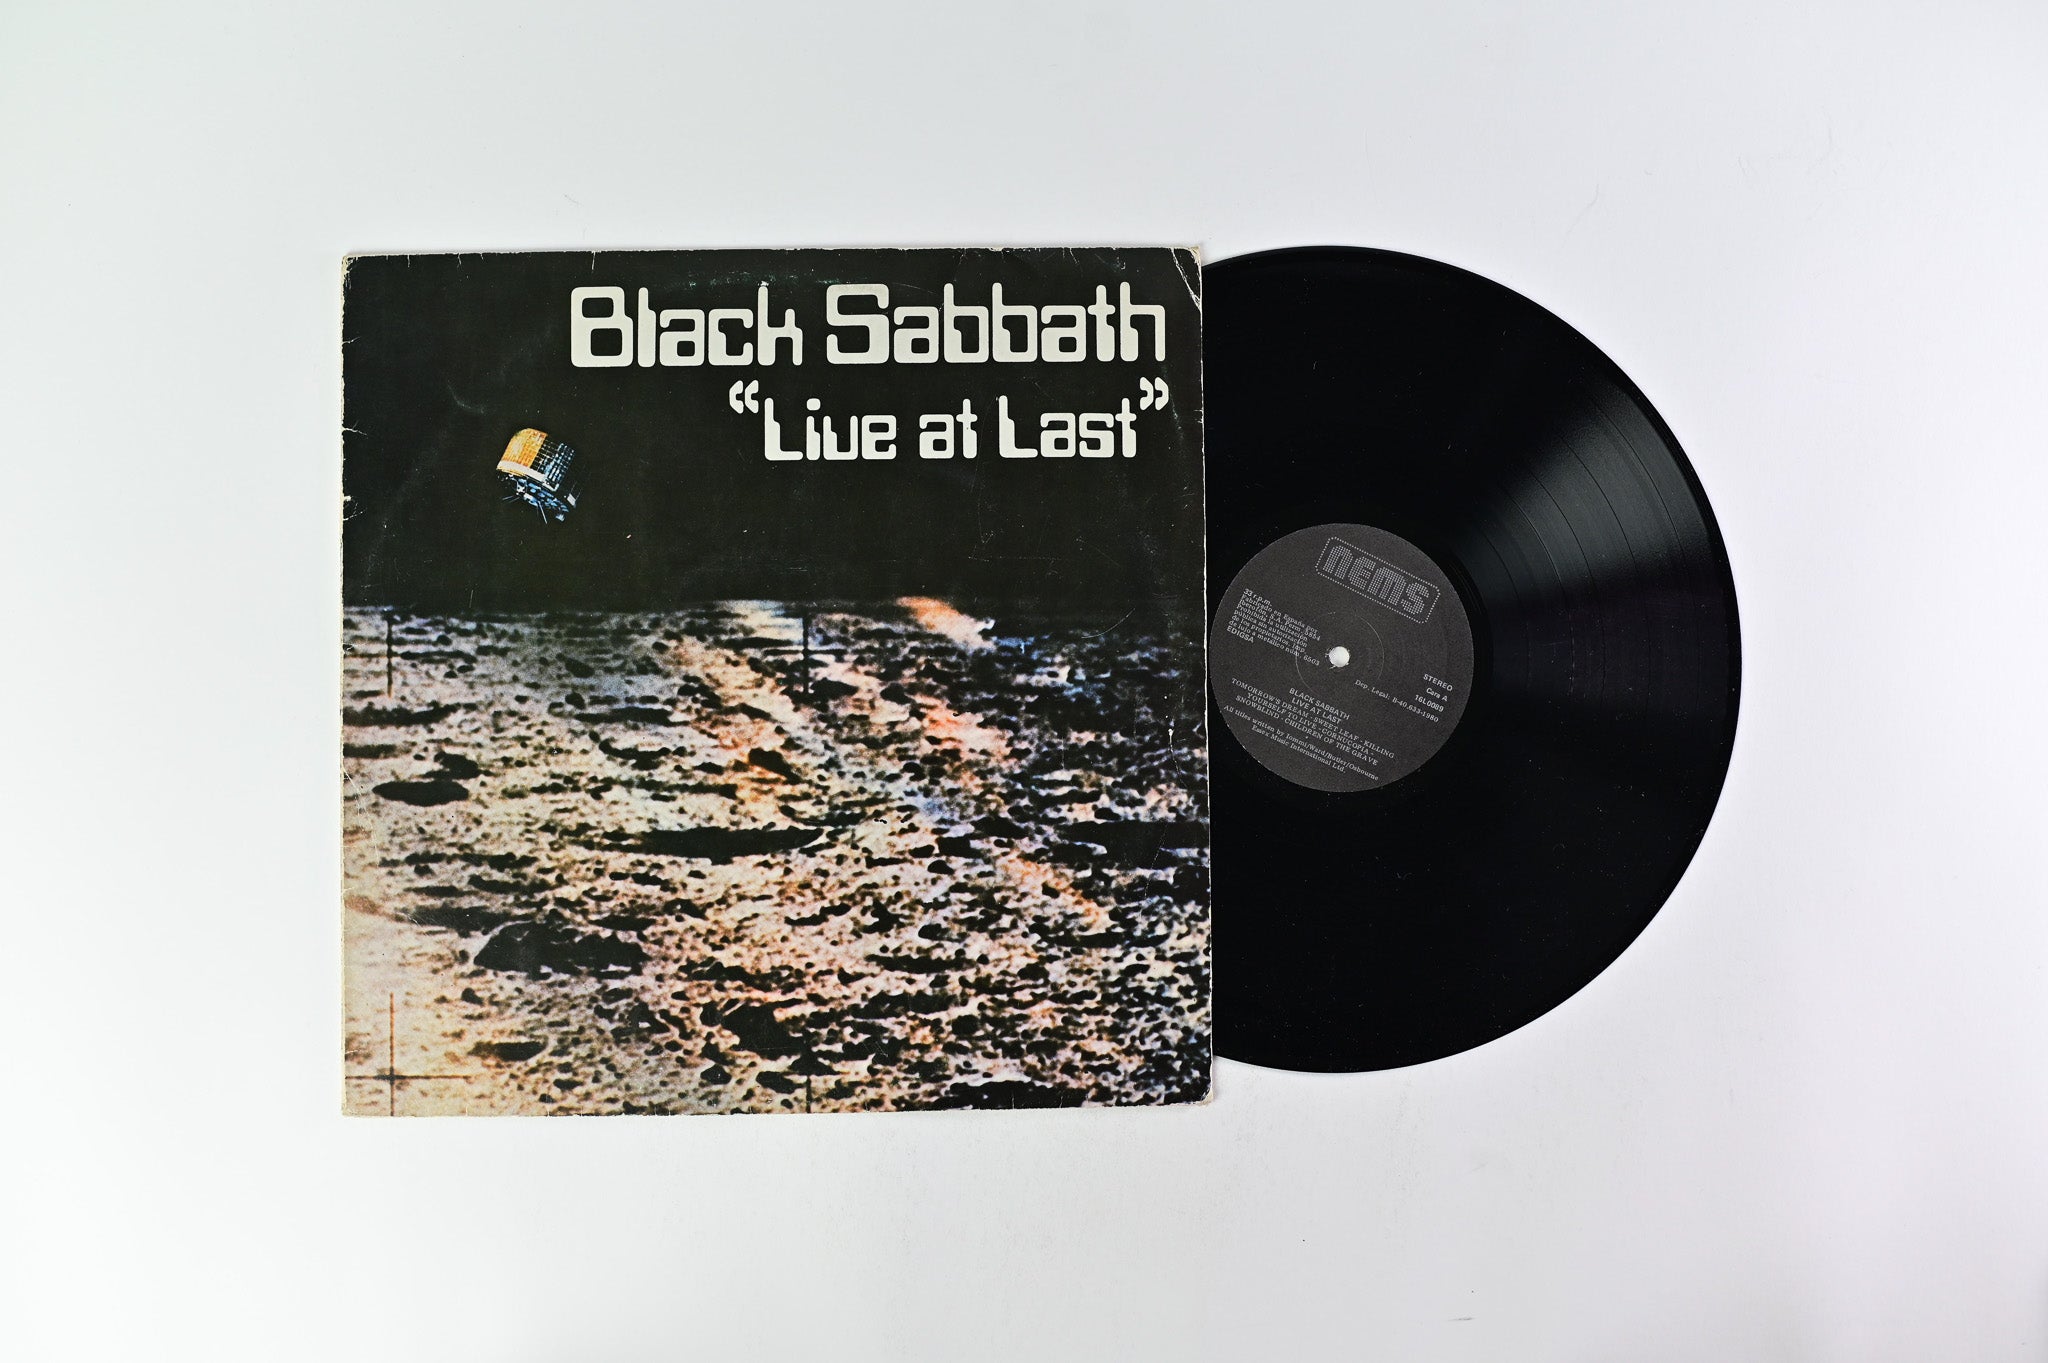 Black Sabbath - Live At Last... on NEMS - Spanish pressing